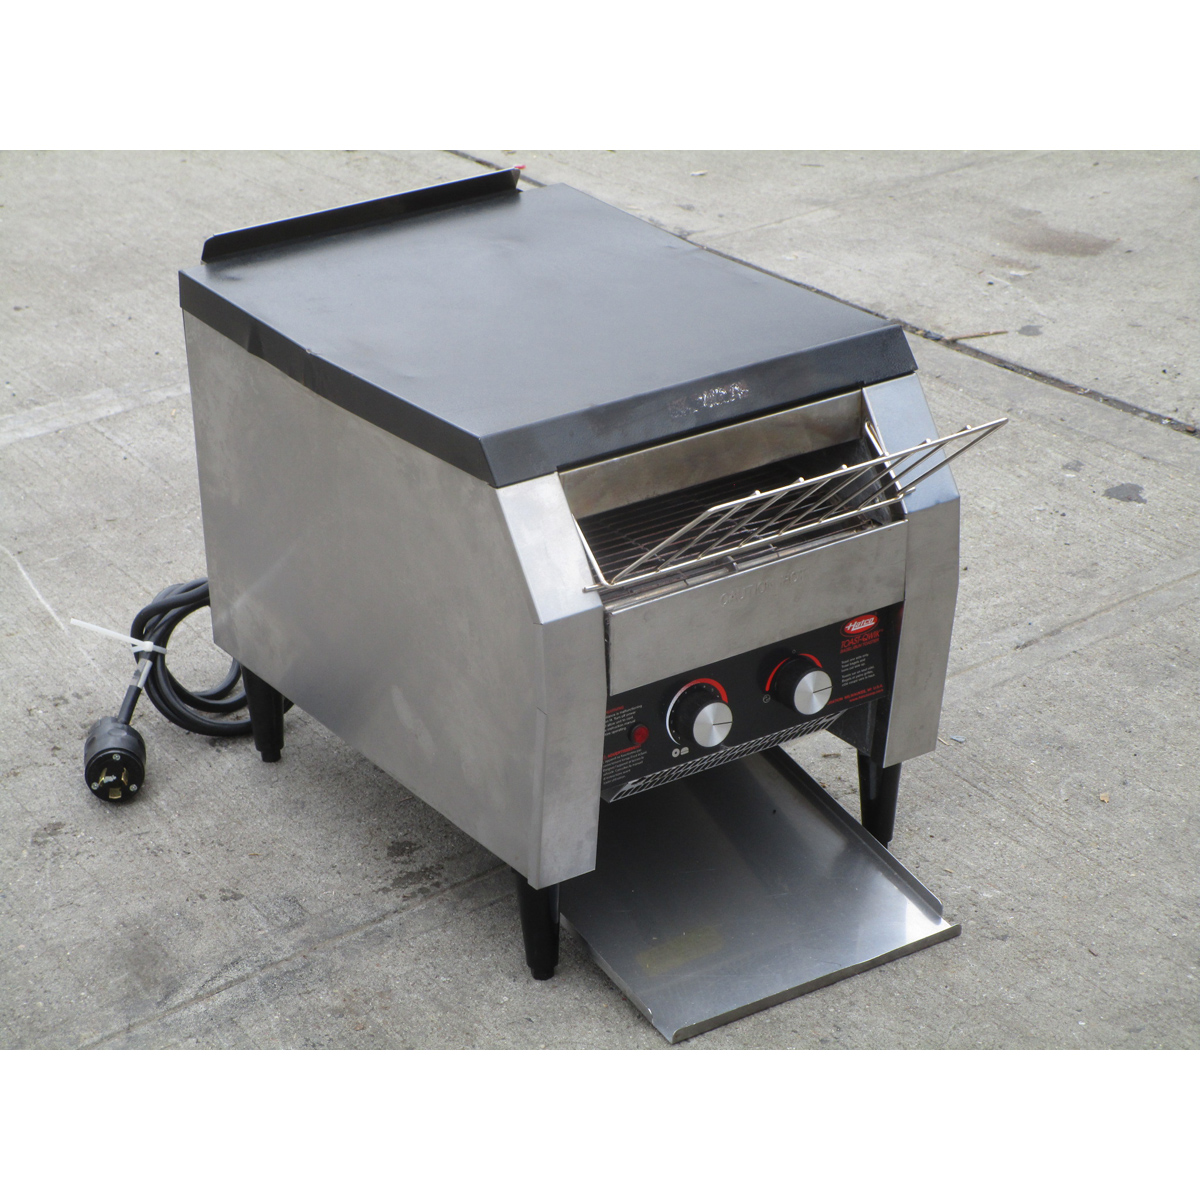 Hatco TQ-20BA Conveyor Toaster, Used Great Condition image 1